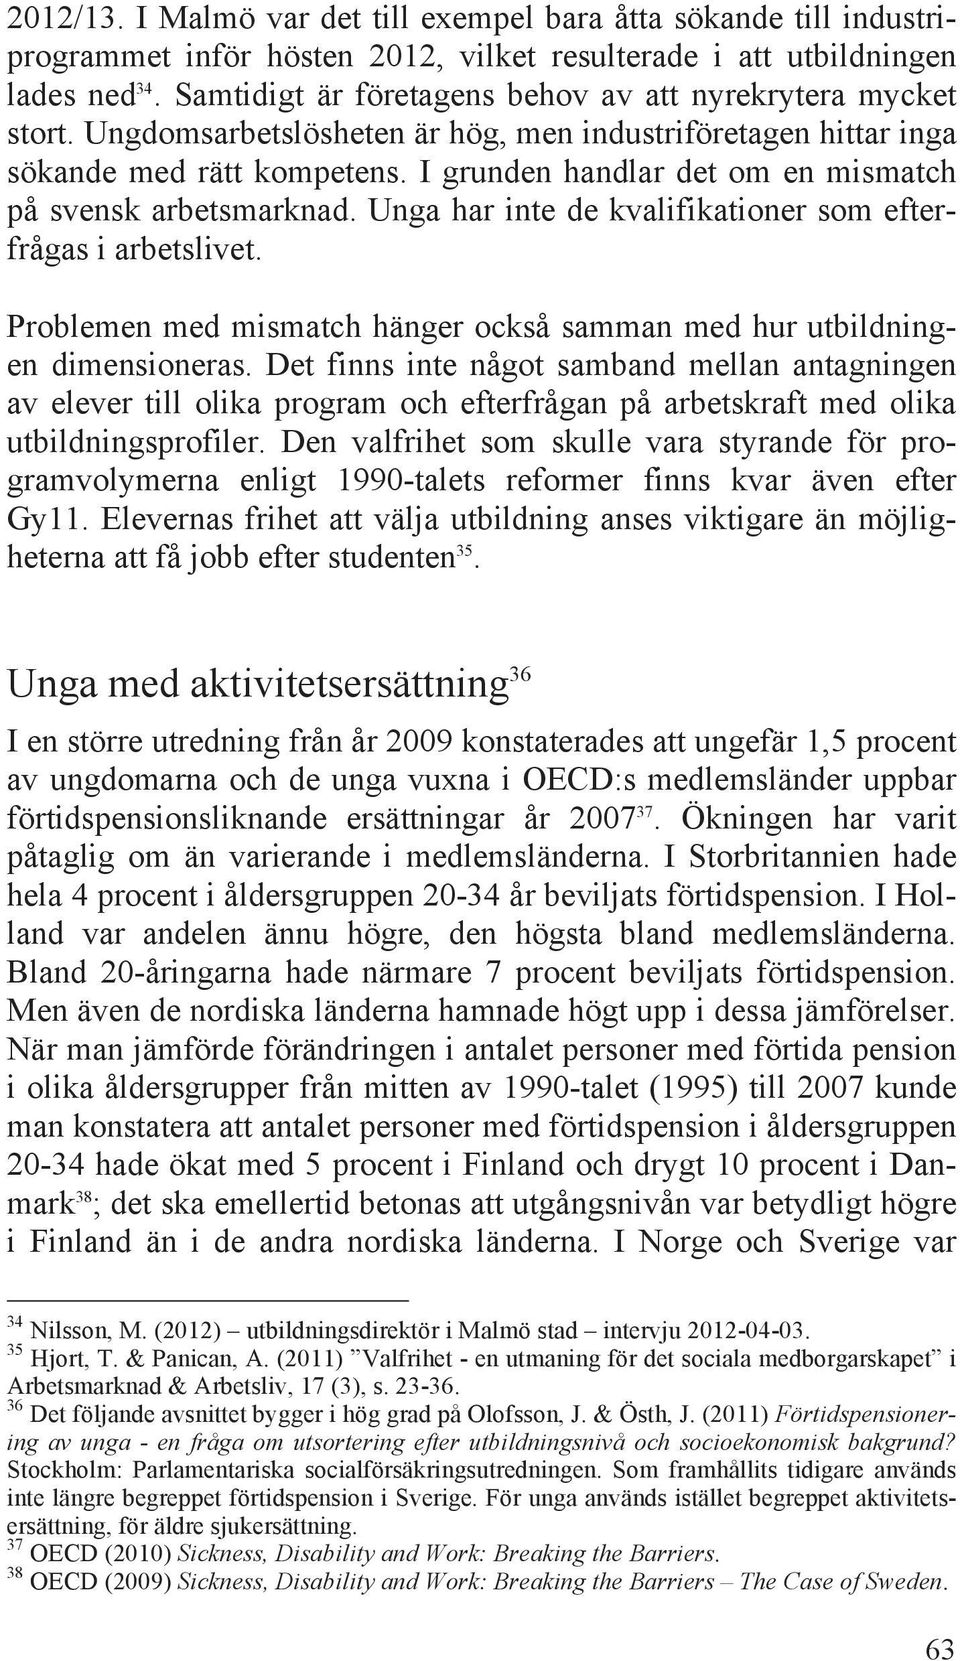 I grunden handlar det om en mismatch på svensk arbetsmarknad. Unga har inte de kvalifikationer som efterfrågas i arbetslivet.